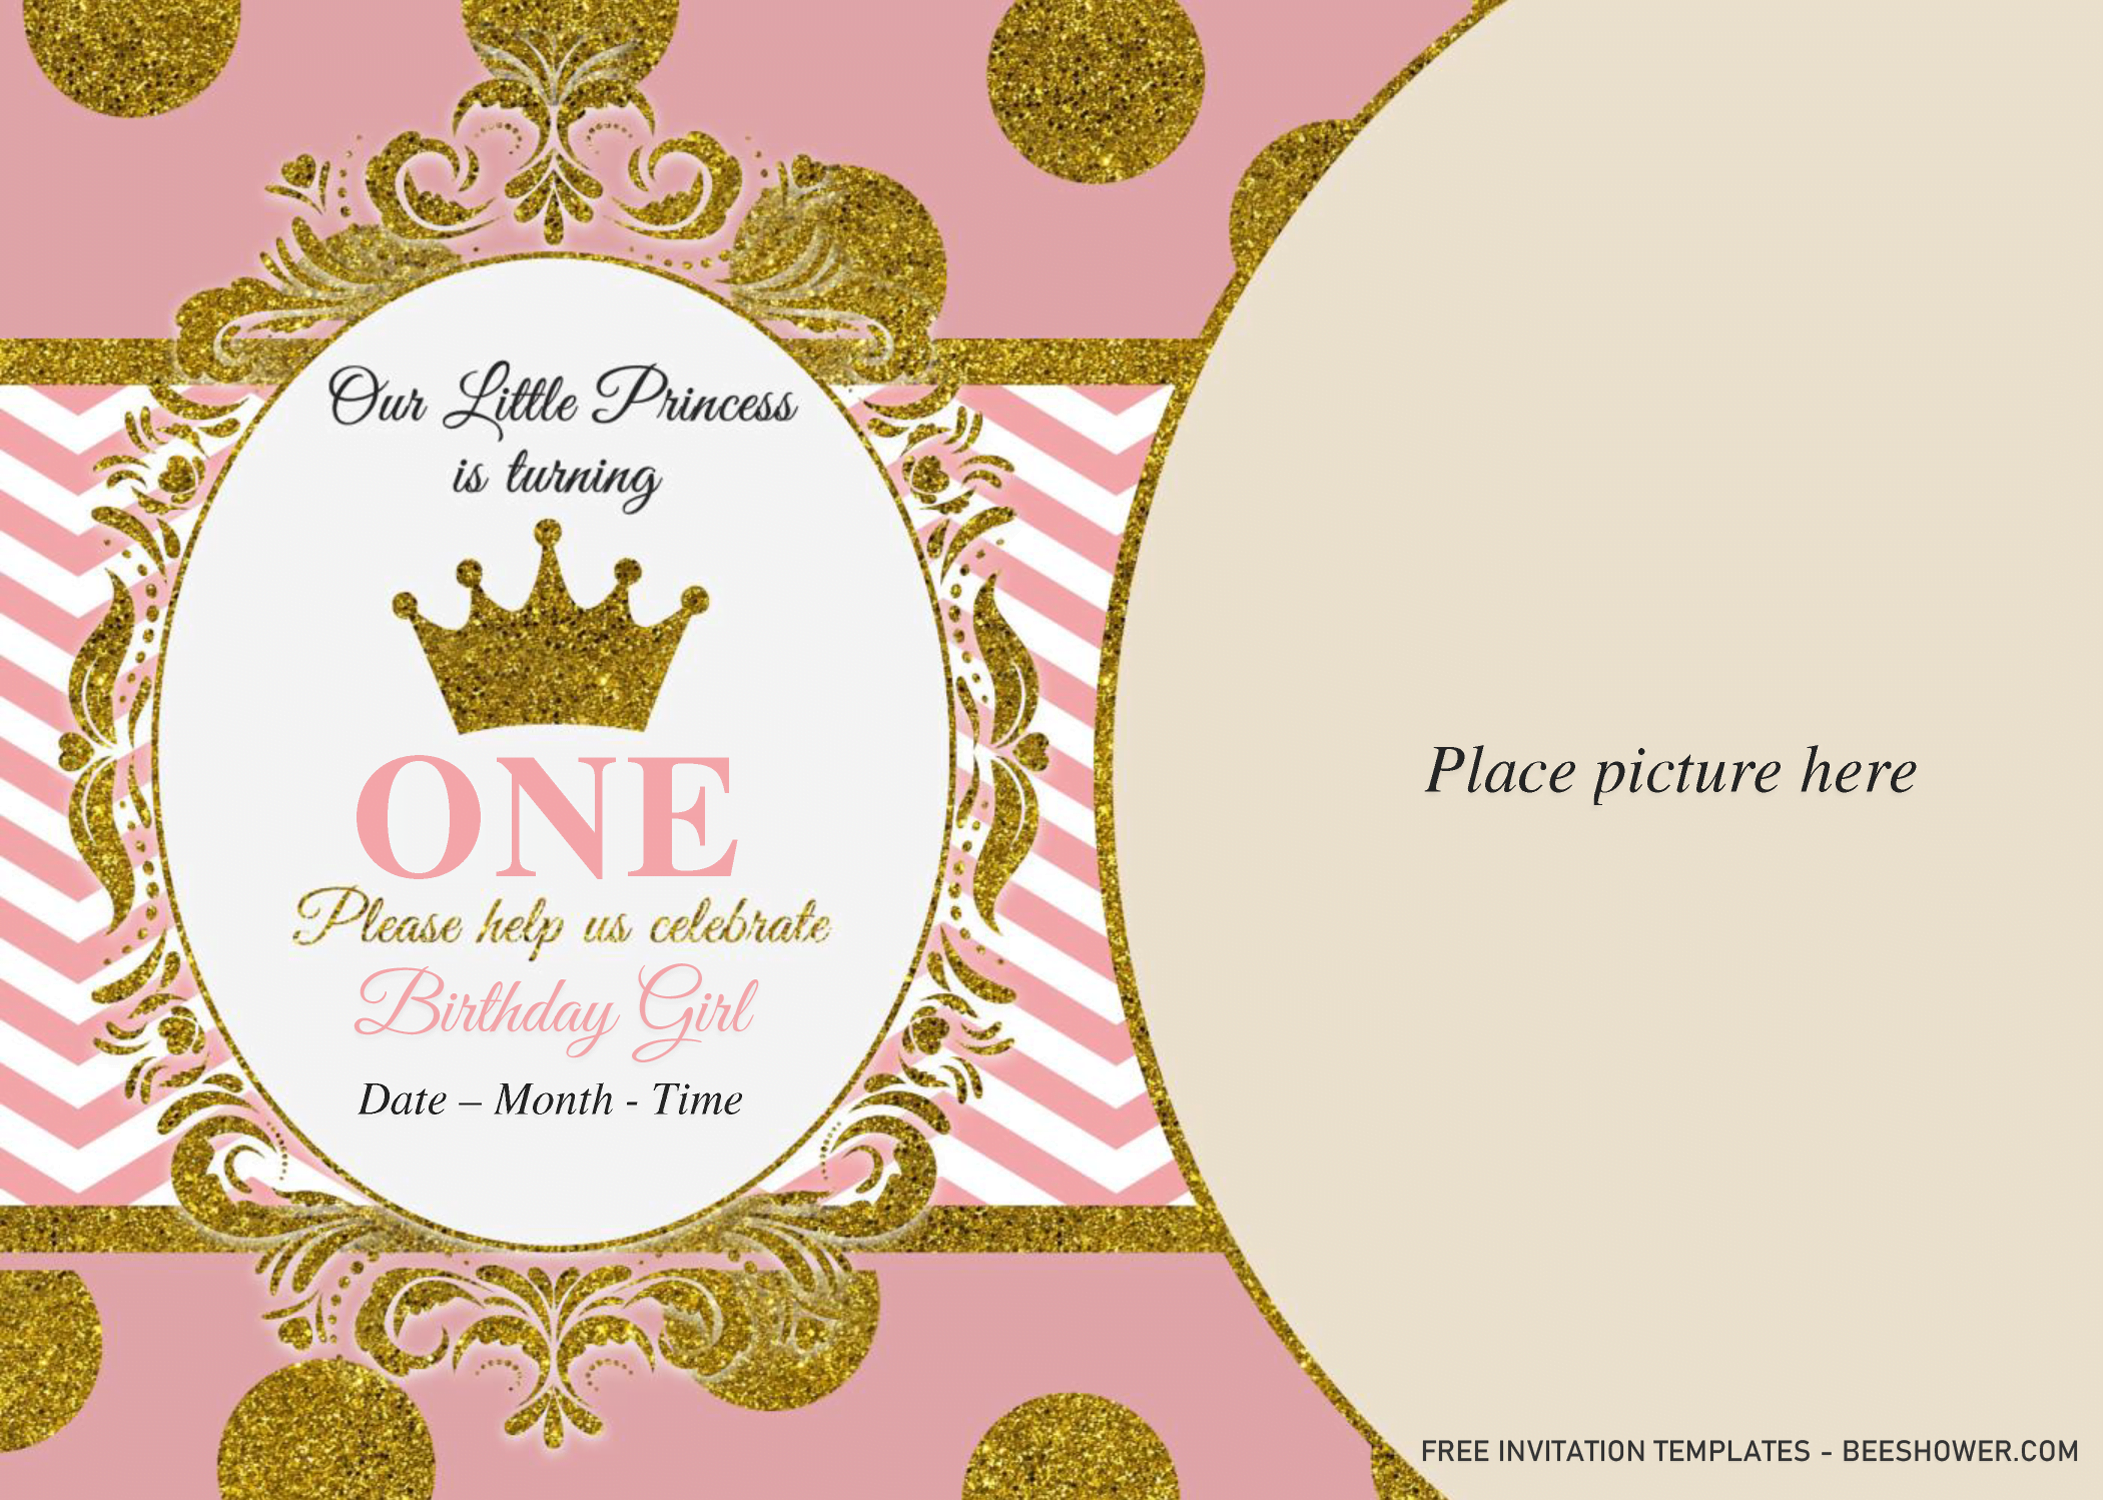 Royal Princess Baby Shower Invitation Templates Editable .Docx FREE